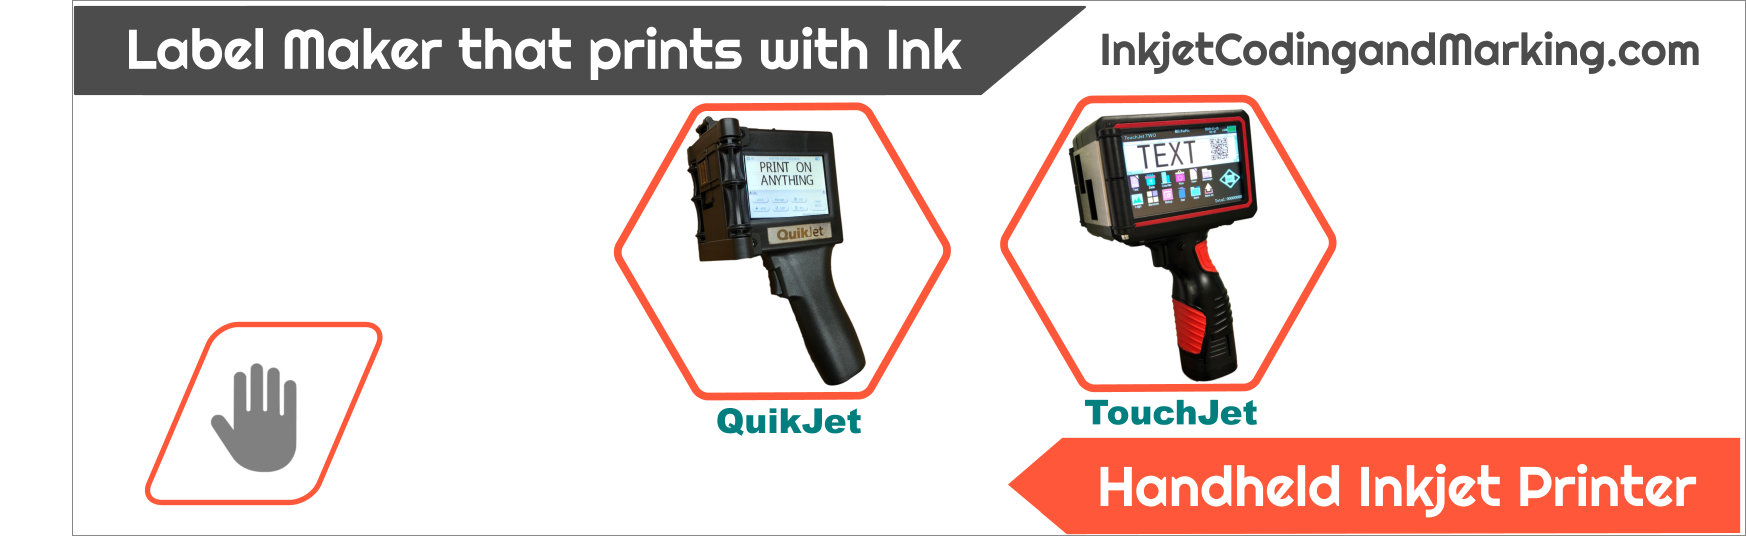 Label Maker - Handheld Inkjet Printer